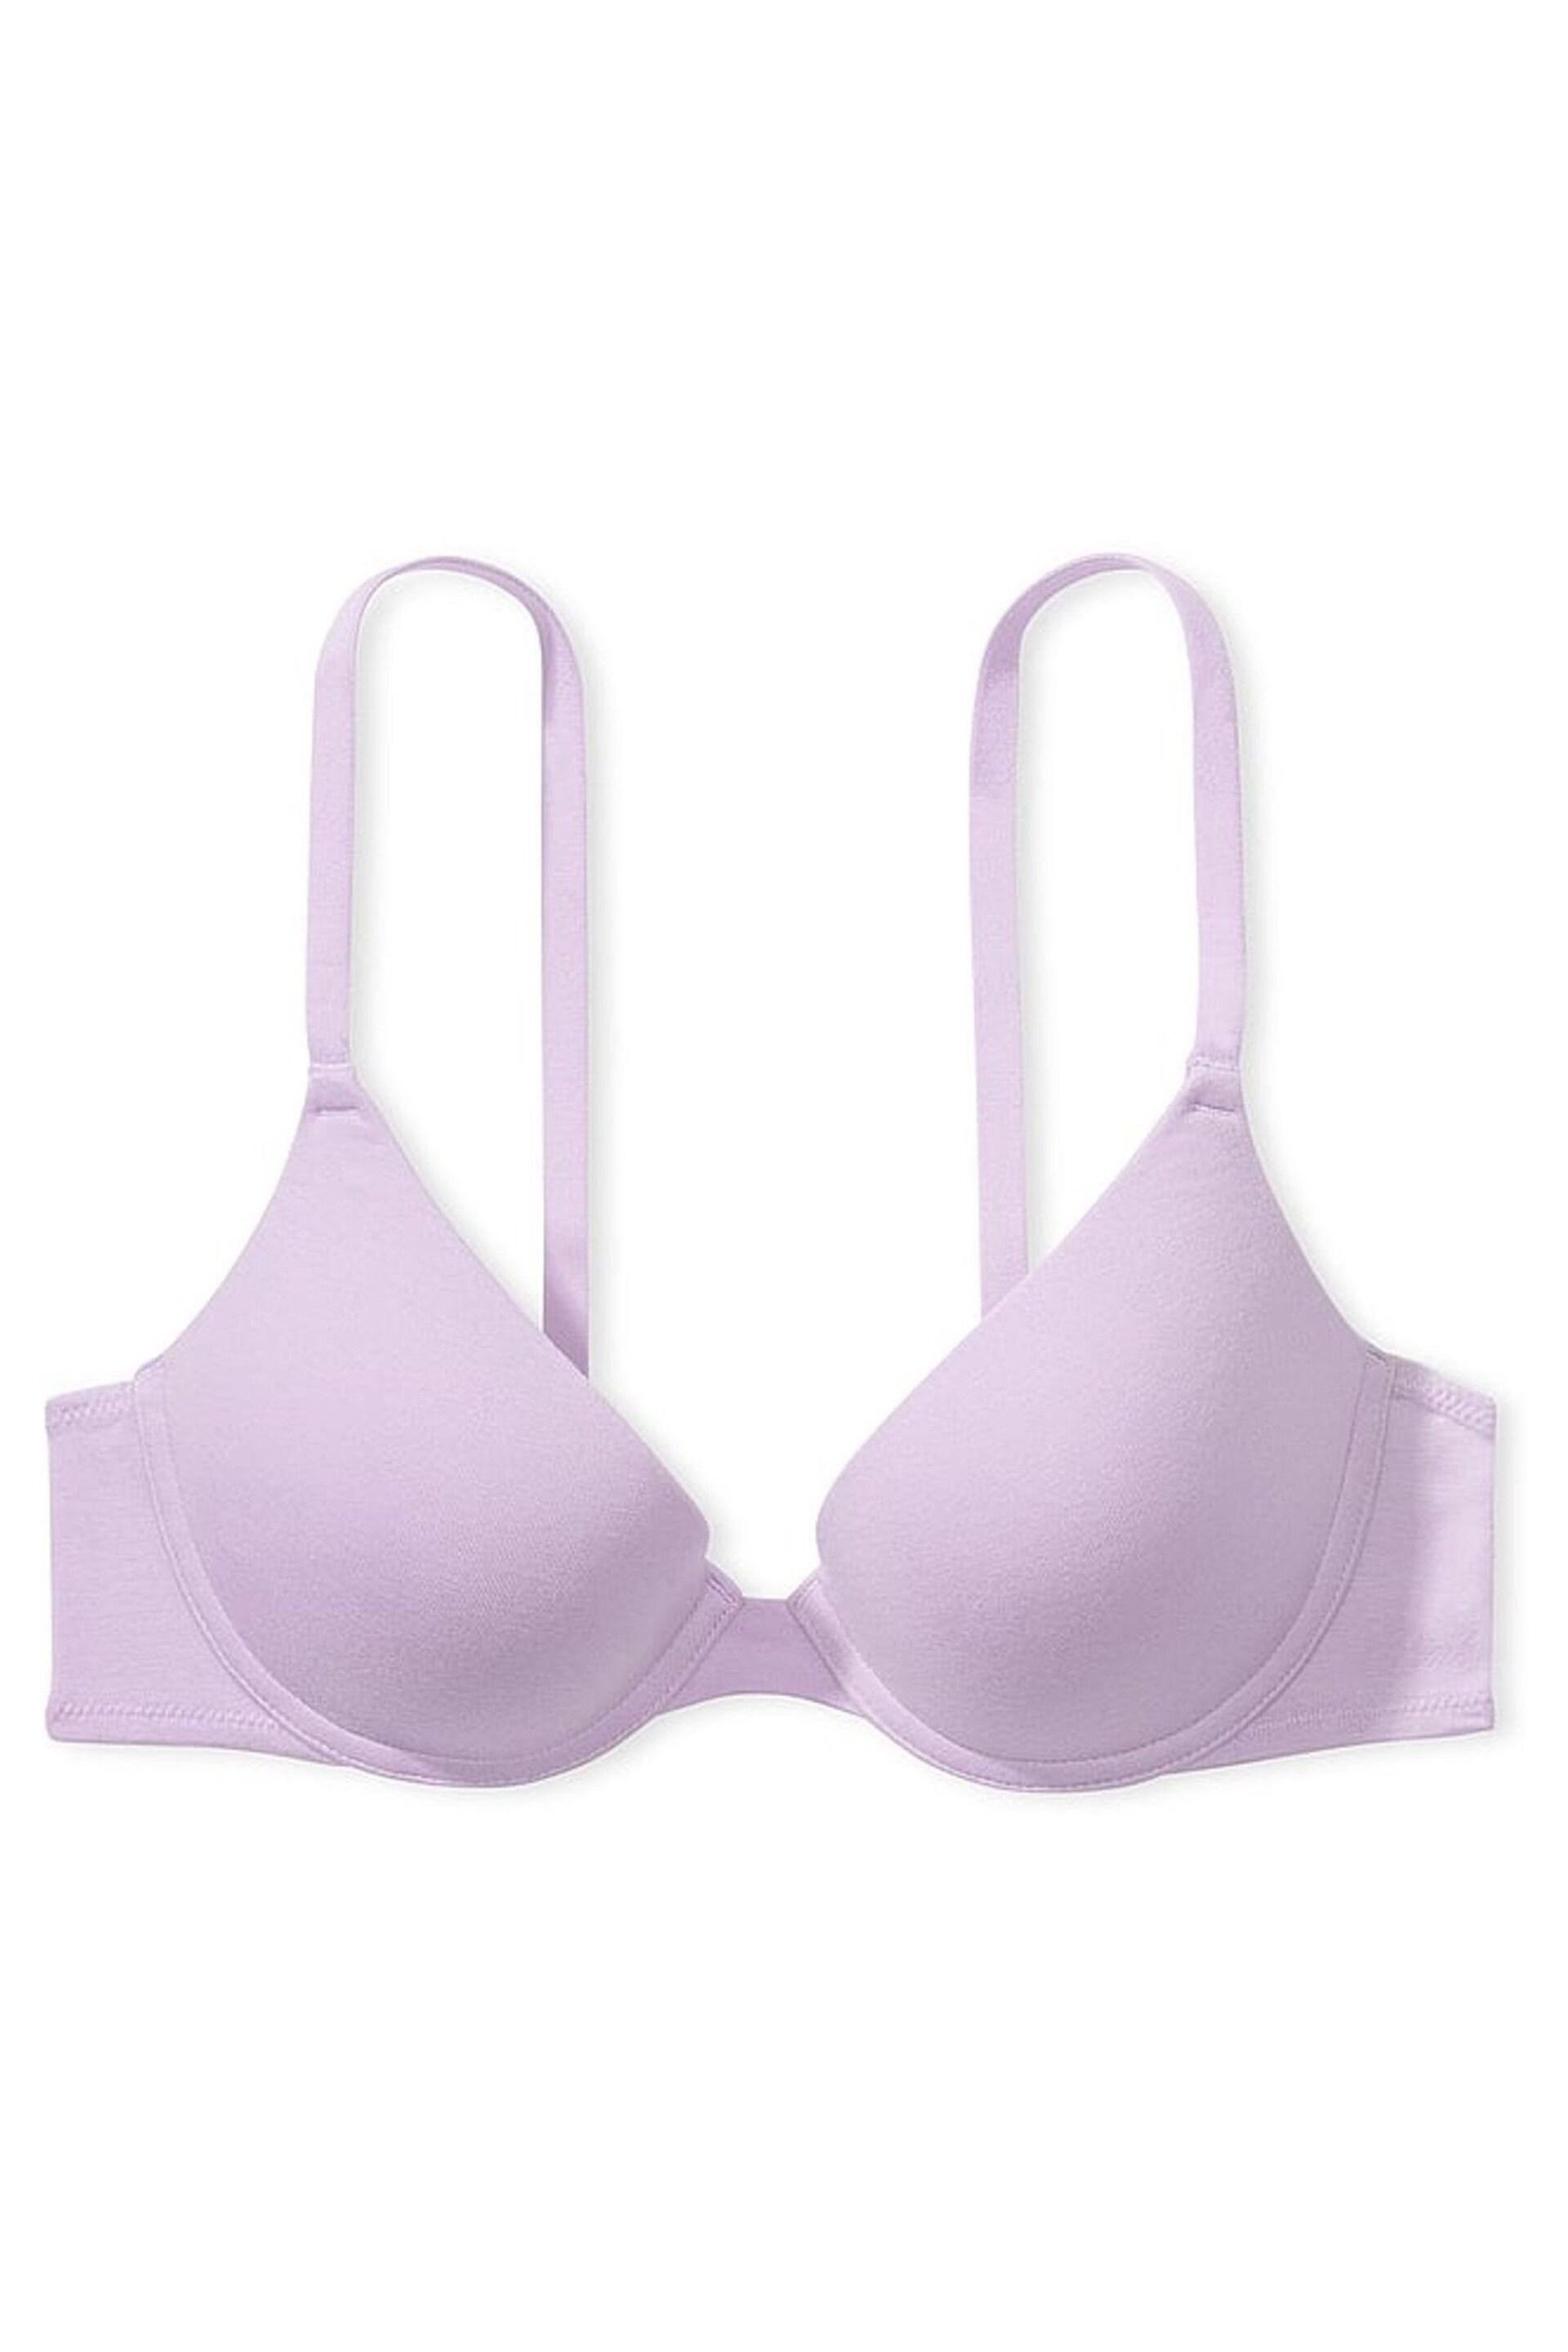 Victoria's Secret PINK Pastel Lilac Purple Push Up Cotton Bra - Image 3 of 3